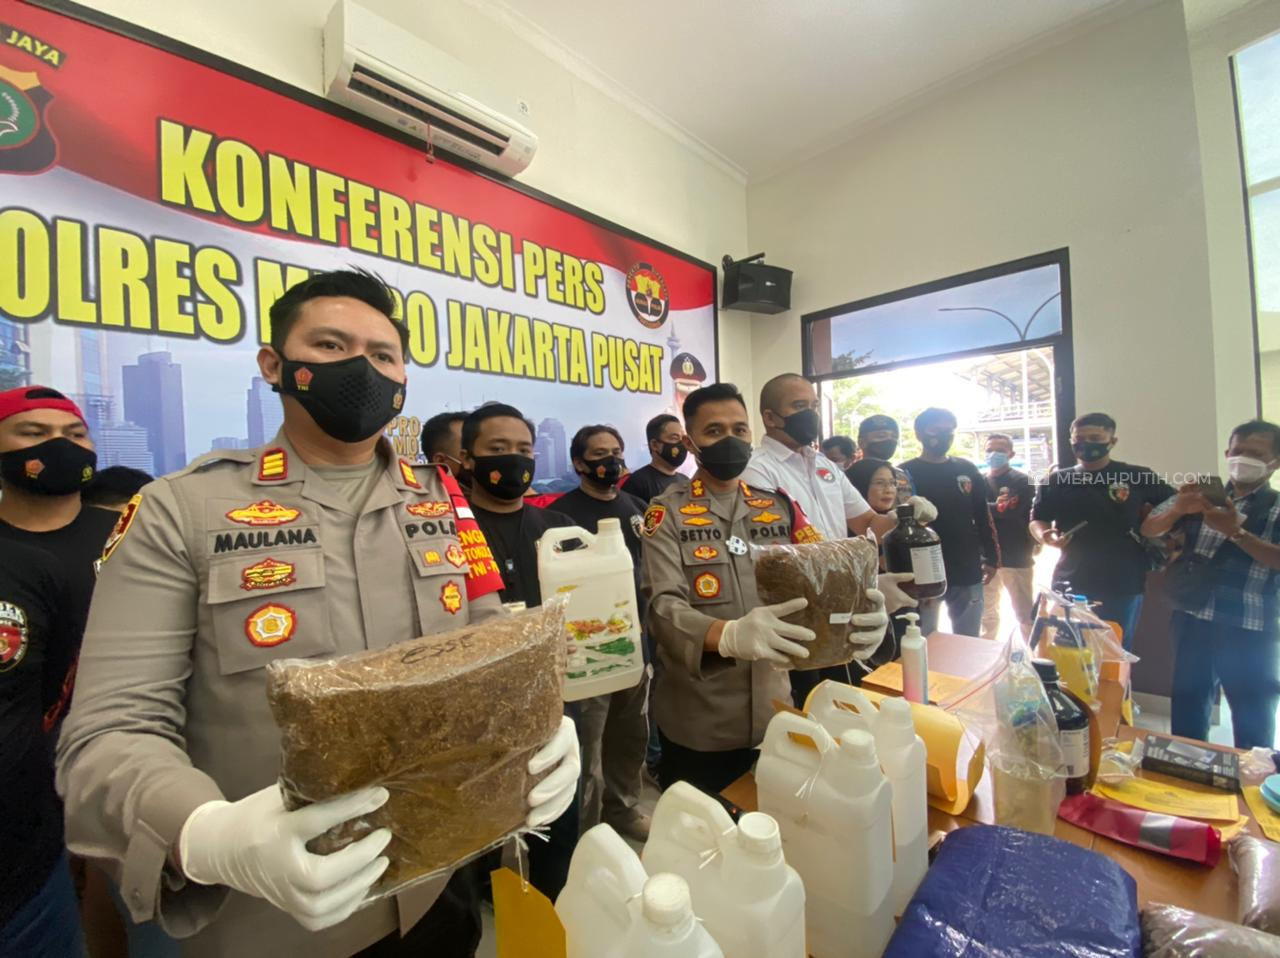 Polres Jakarta Pusat rilis hasil pengungkapan penjualan ganja gorila di wilayah Kembangan, Jakarta Barat. Polisi menyita 9,8 kilogram barang haram dari empat pelaku. Foto: MP/Kanu